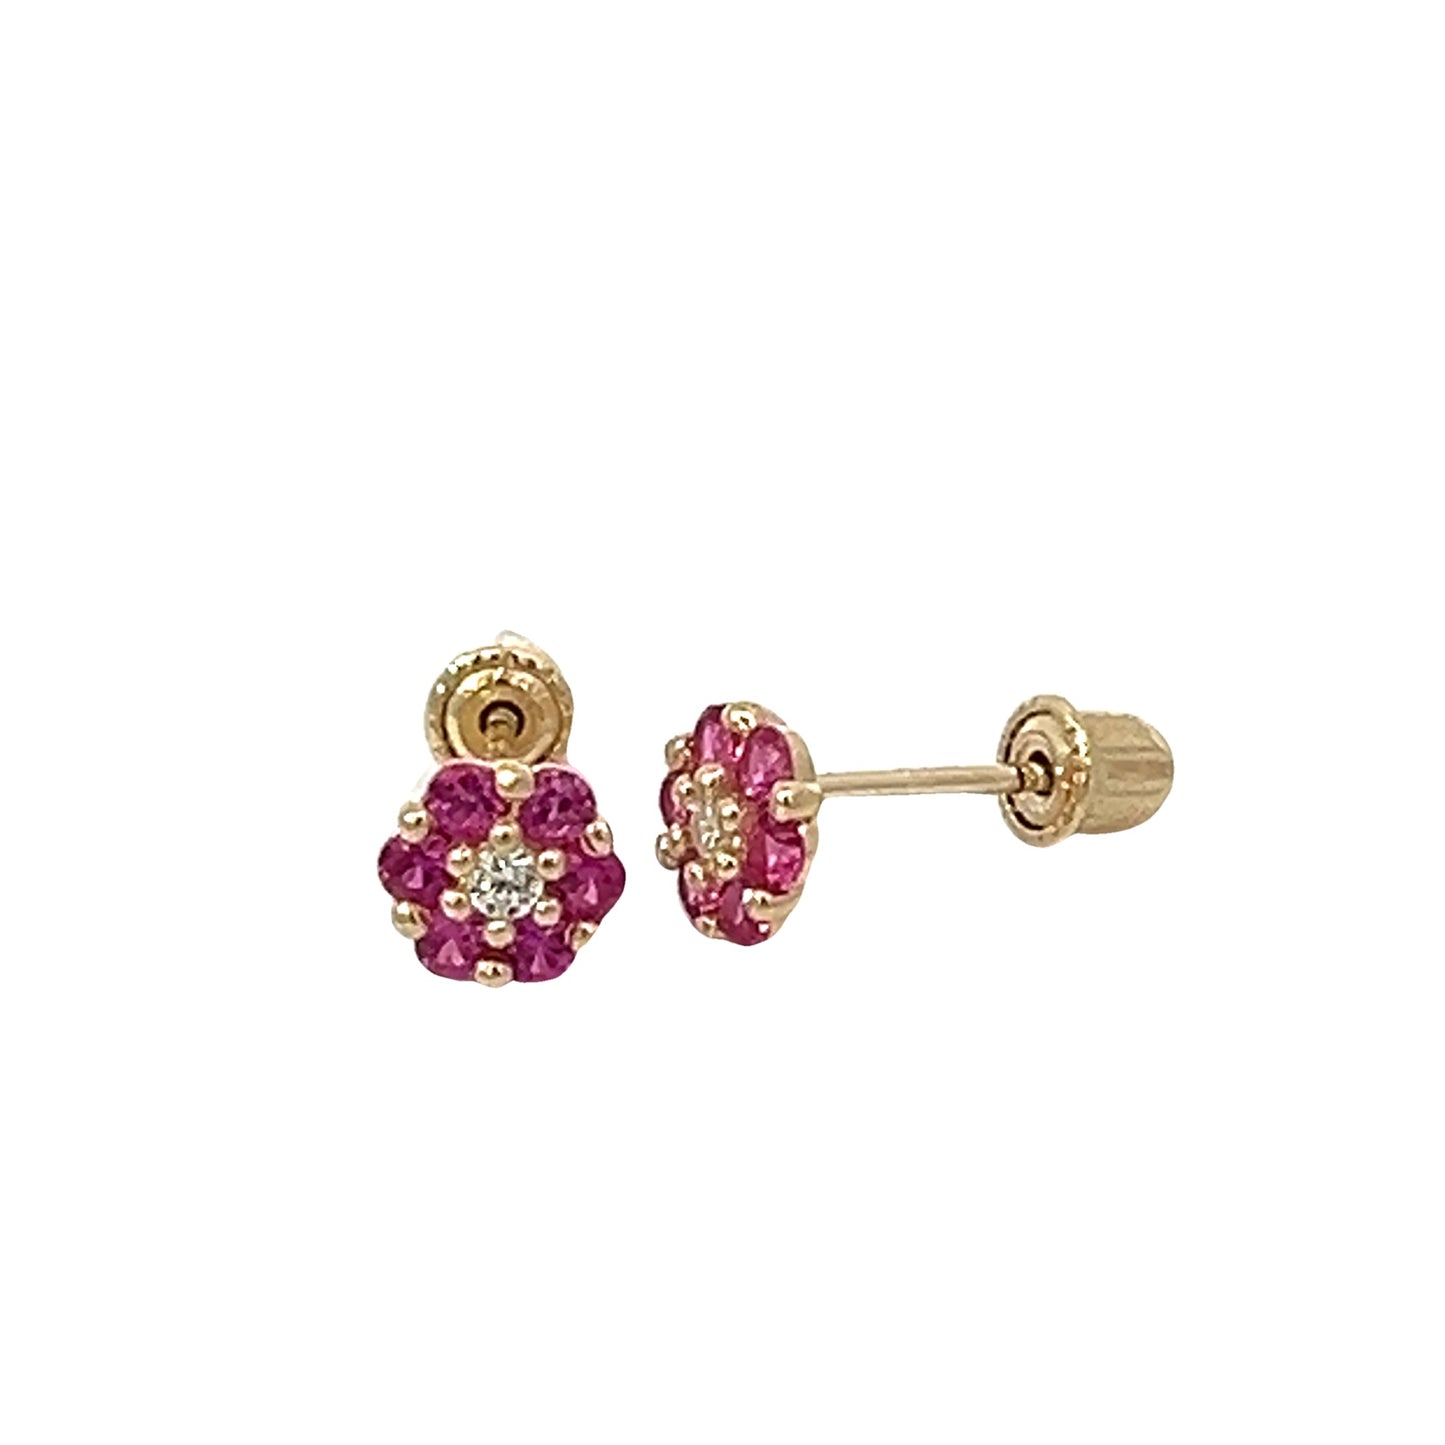 Flower crystal & 14k gold screwback earrings.